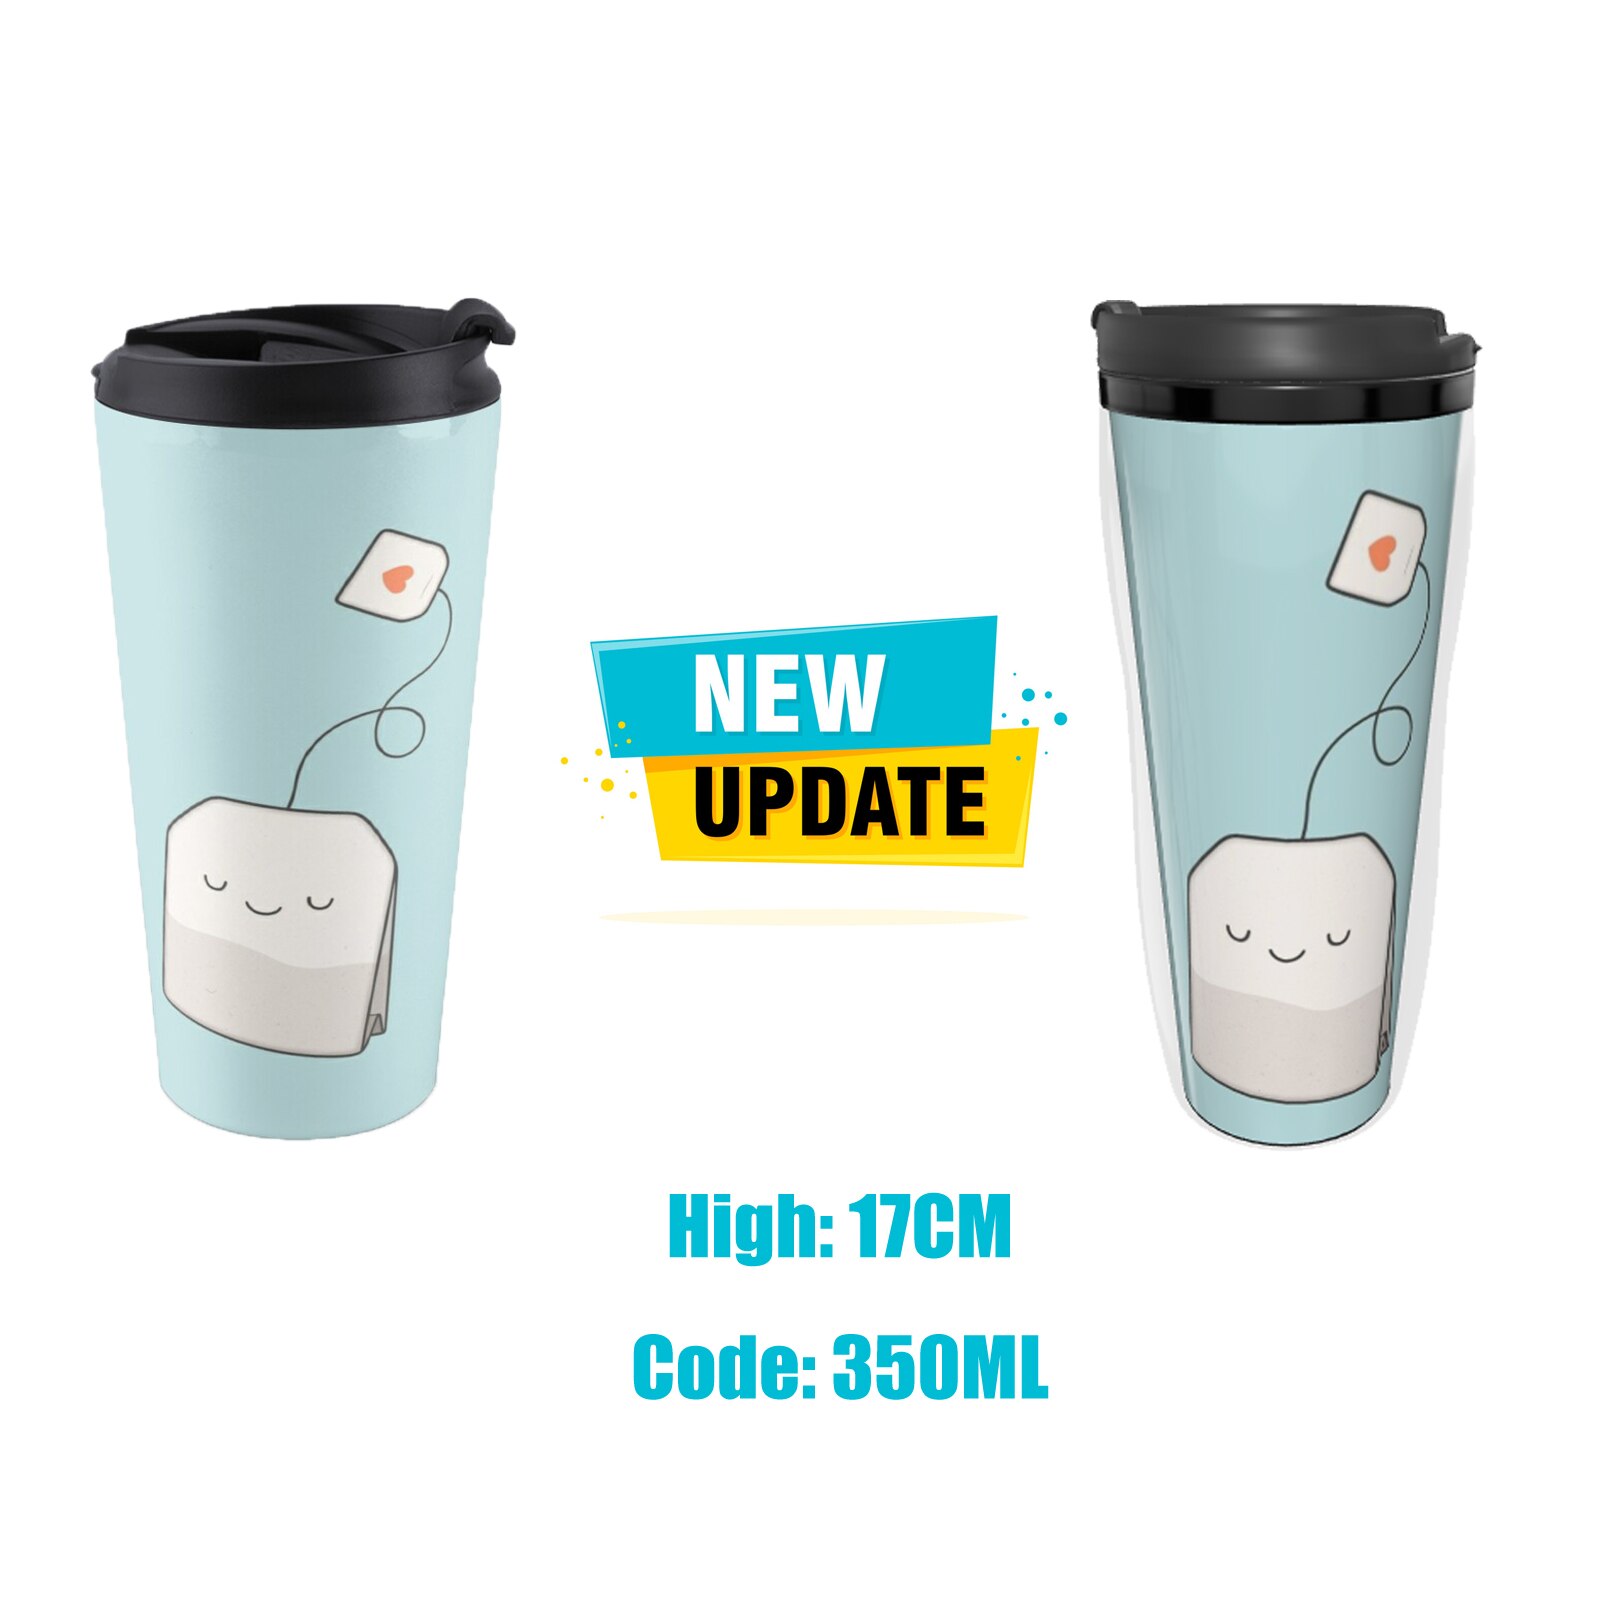 Takoma Park's Uplifting Staircase Travel Coffee Mug Coffee Mug A Cup For Coffee